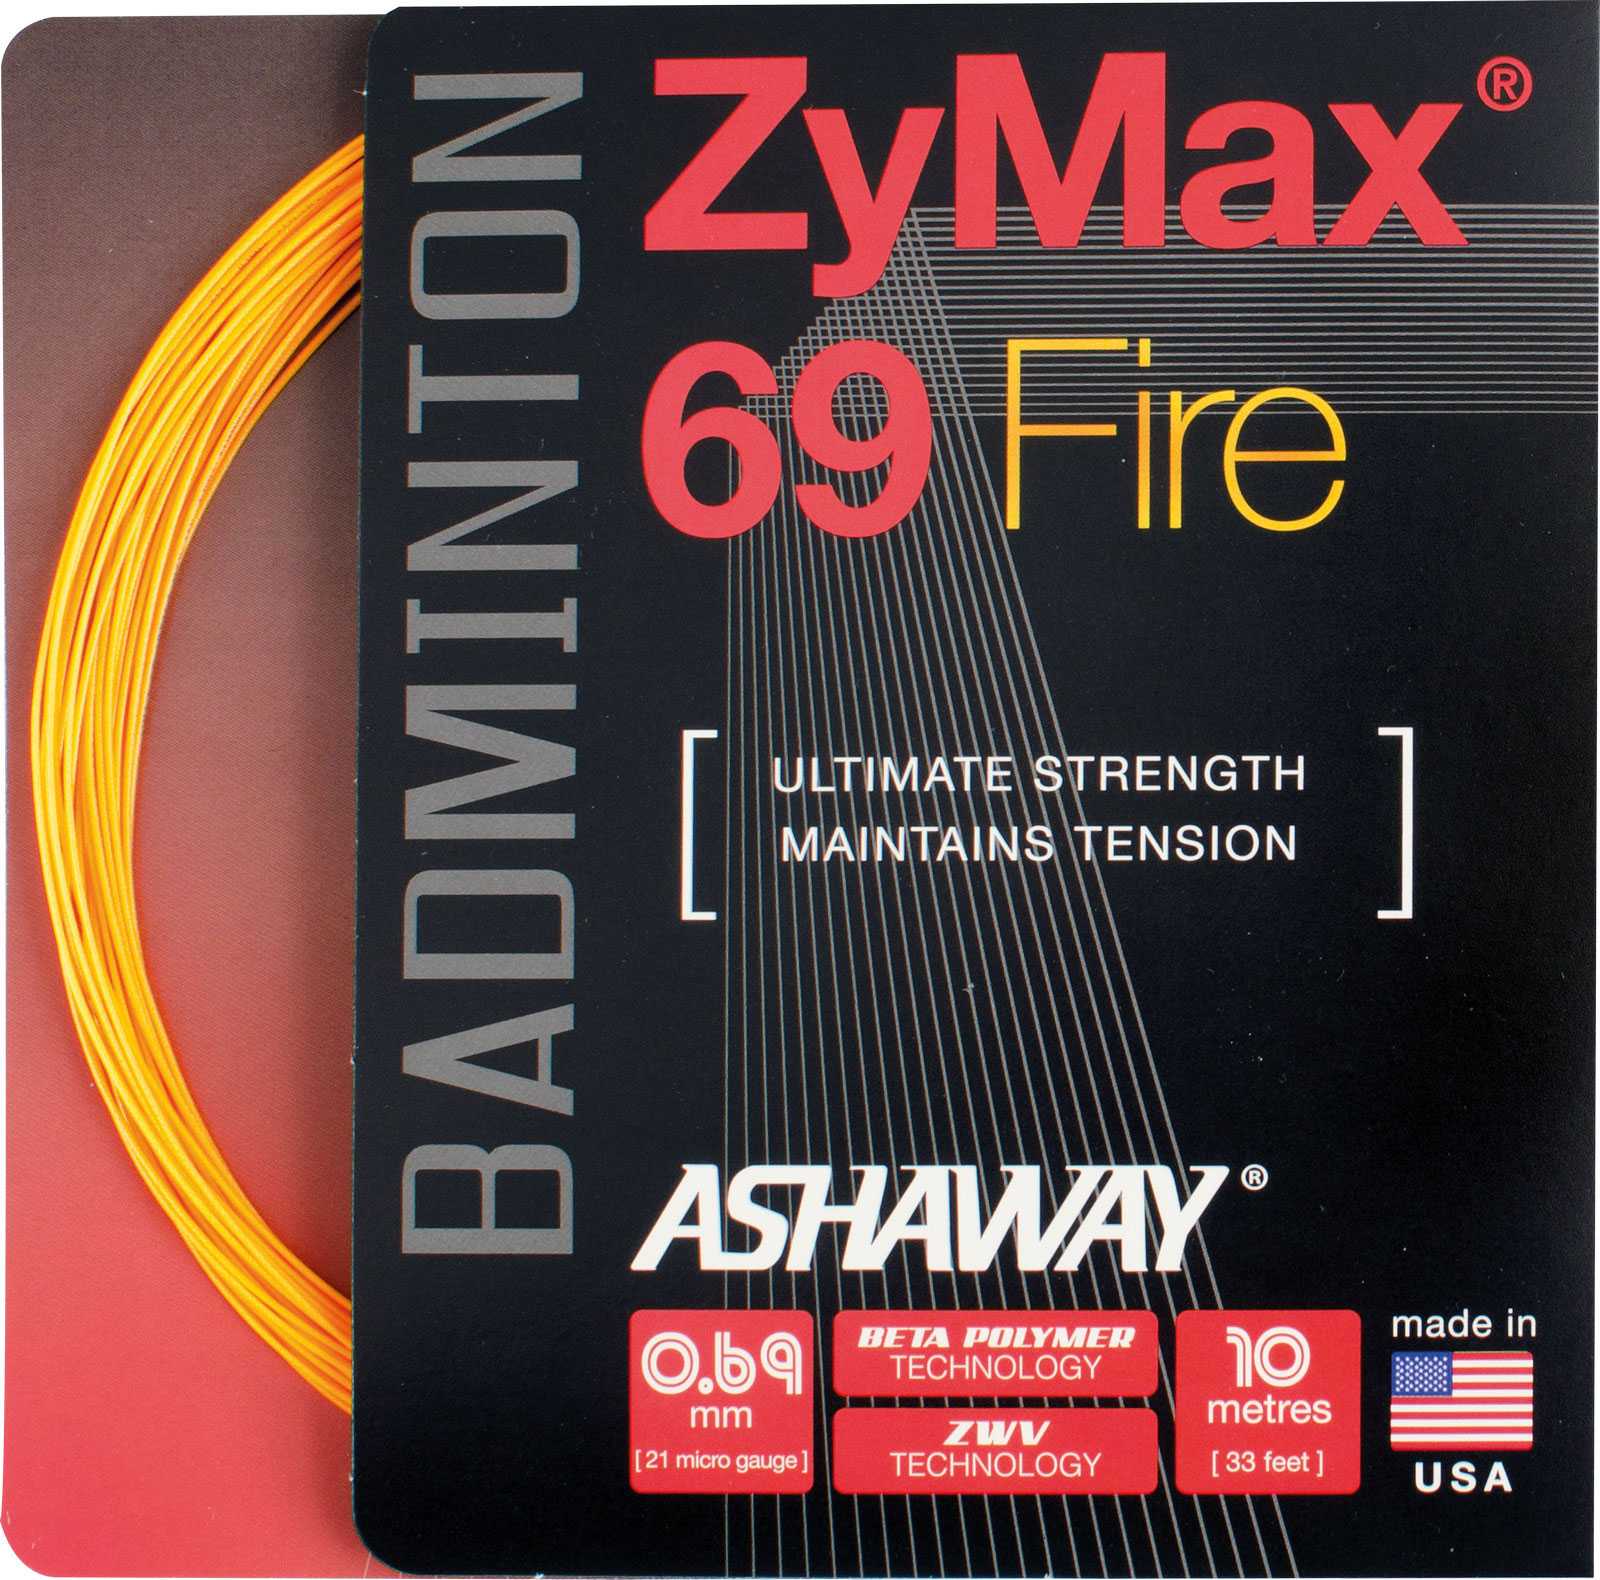 ASHAWAY Zymax 69 Fire - Orange - Set